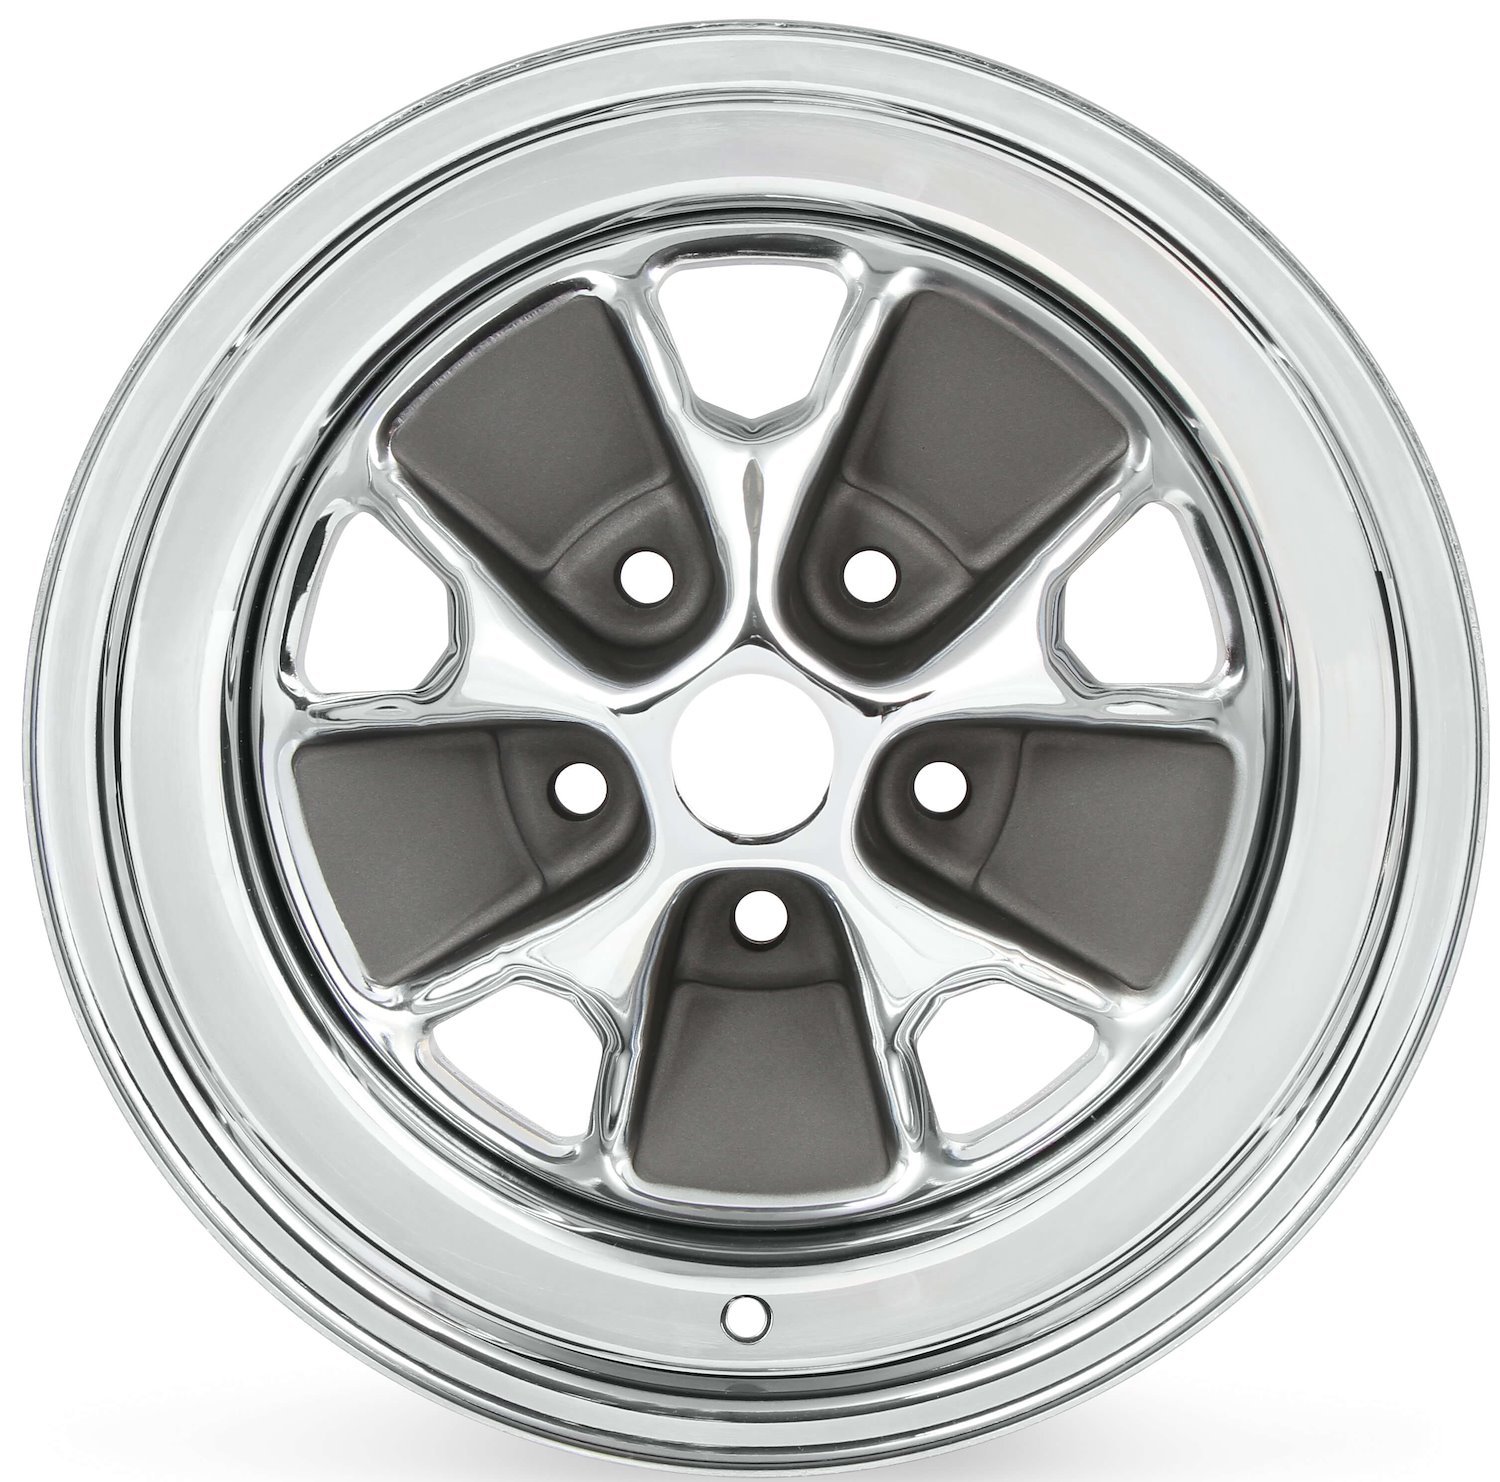 C5ZZ Chrome/Charcoal Styled Steel Wheel [Size: 15